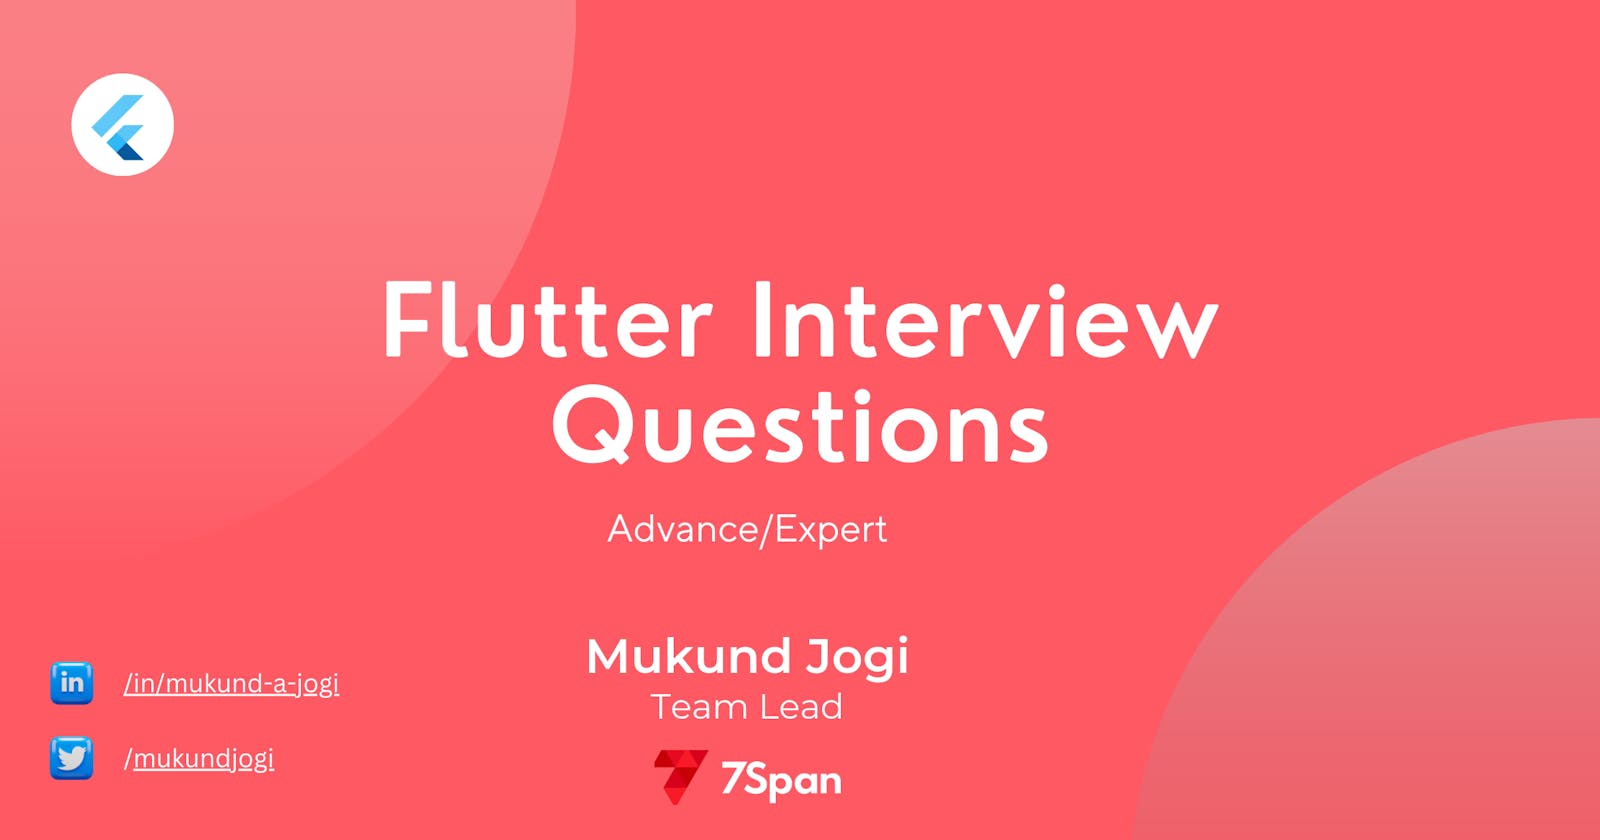 Flutter interview questions for Advance